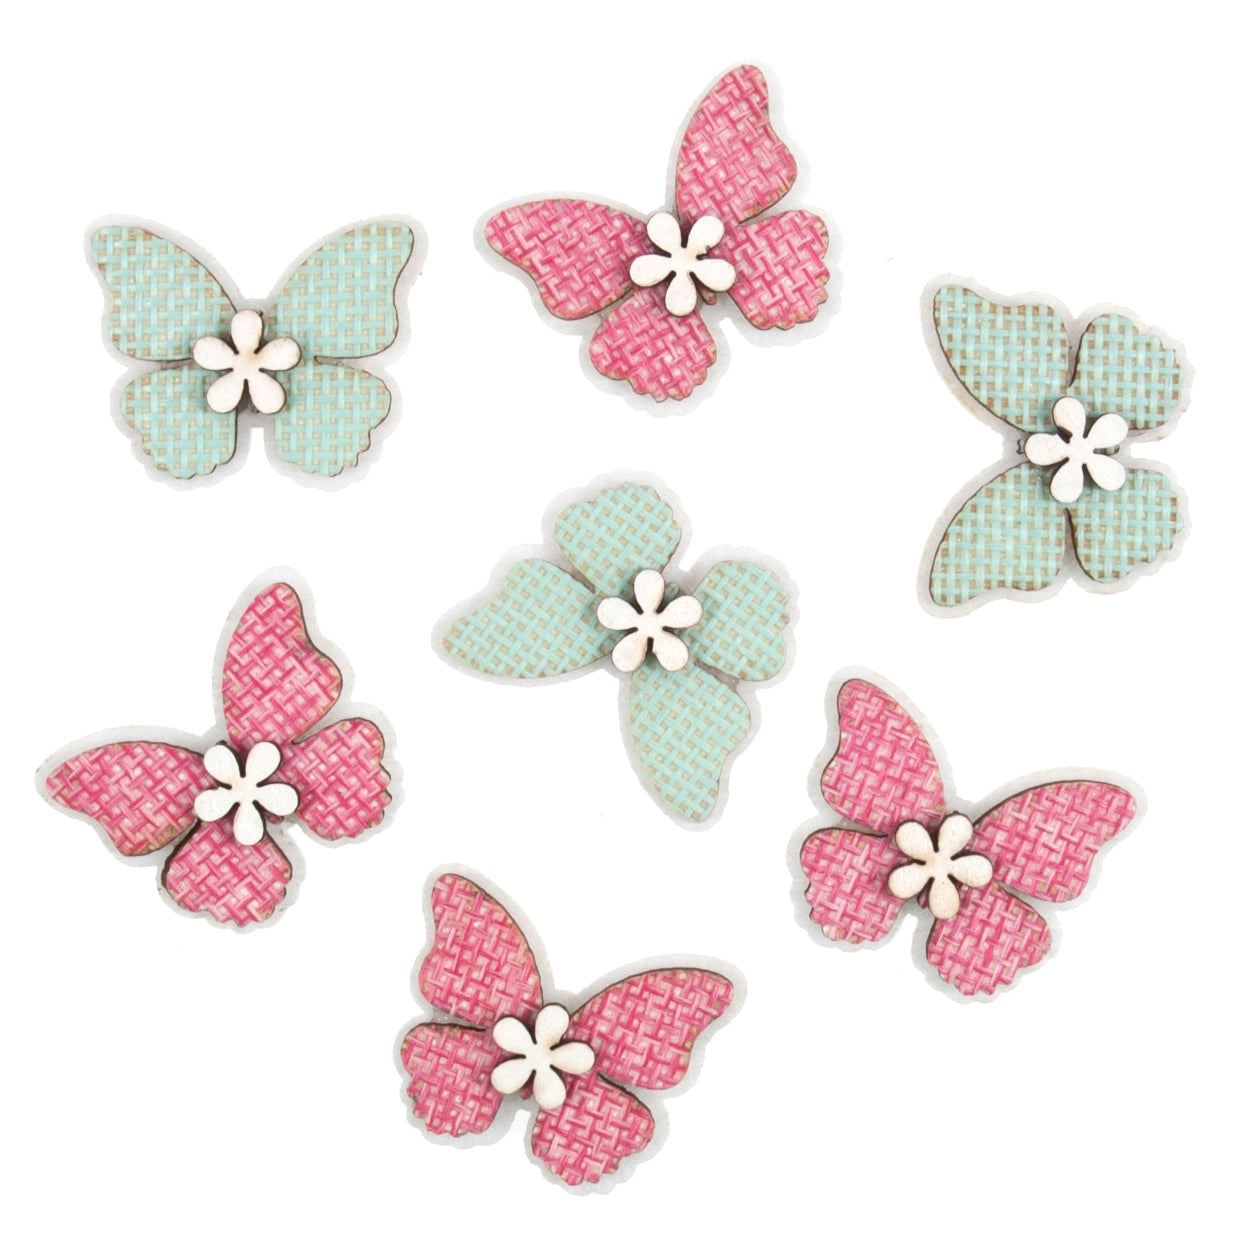 Craft Embellishments: Wood & Felt Butterflies - 7pc